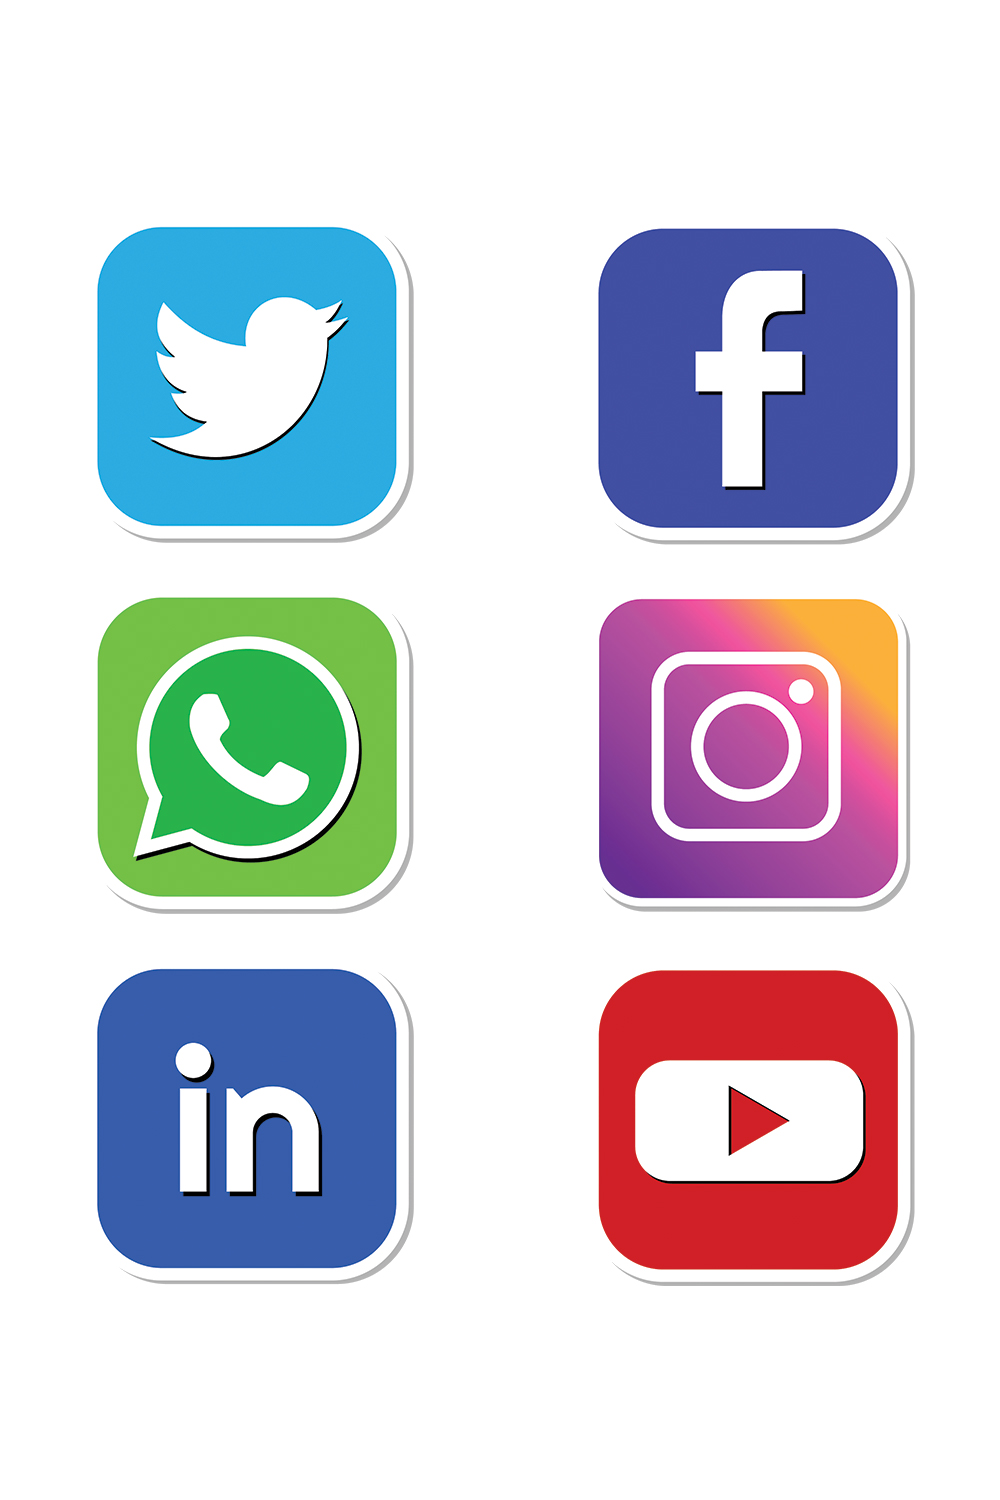 facebook and linkedin logos